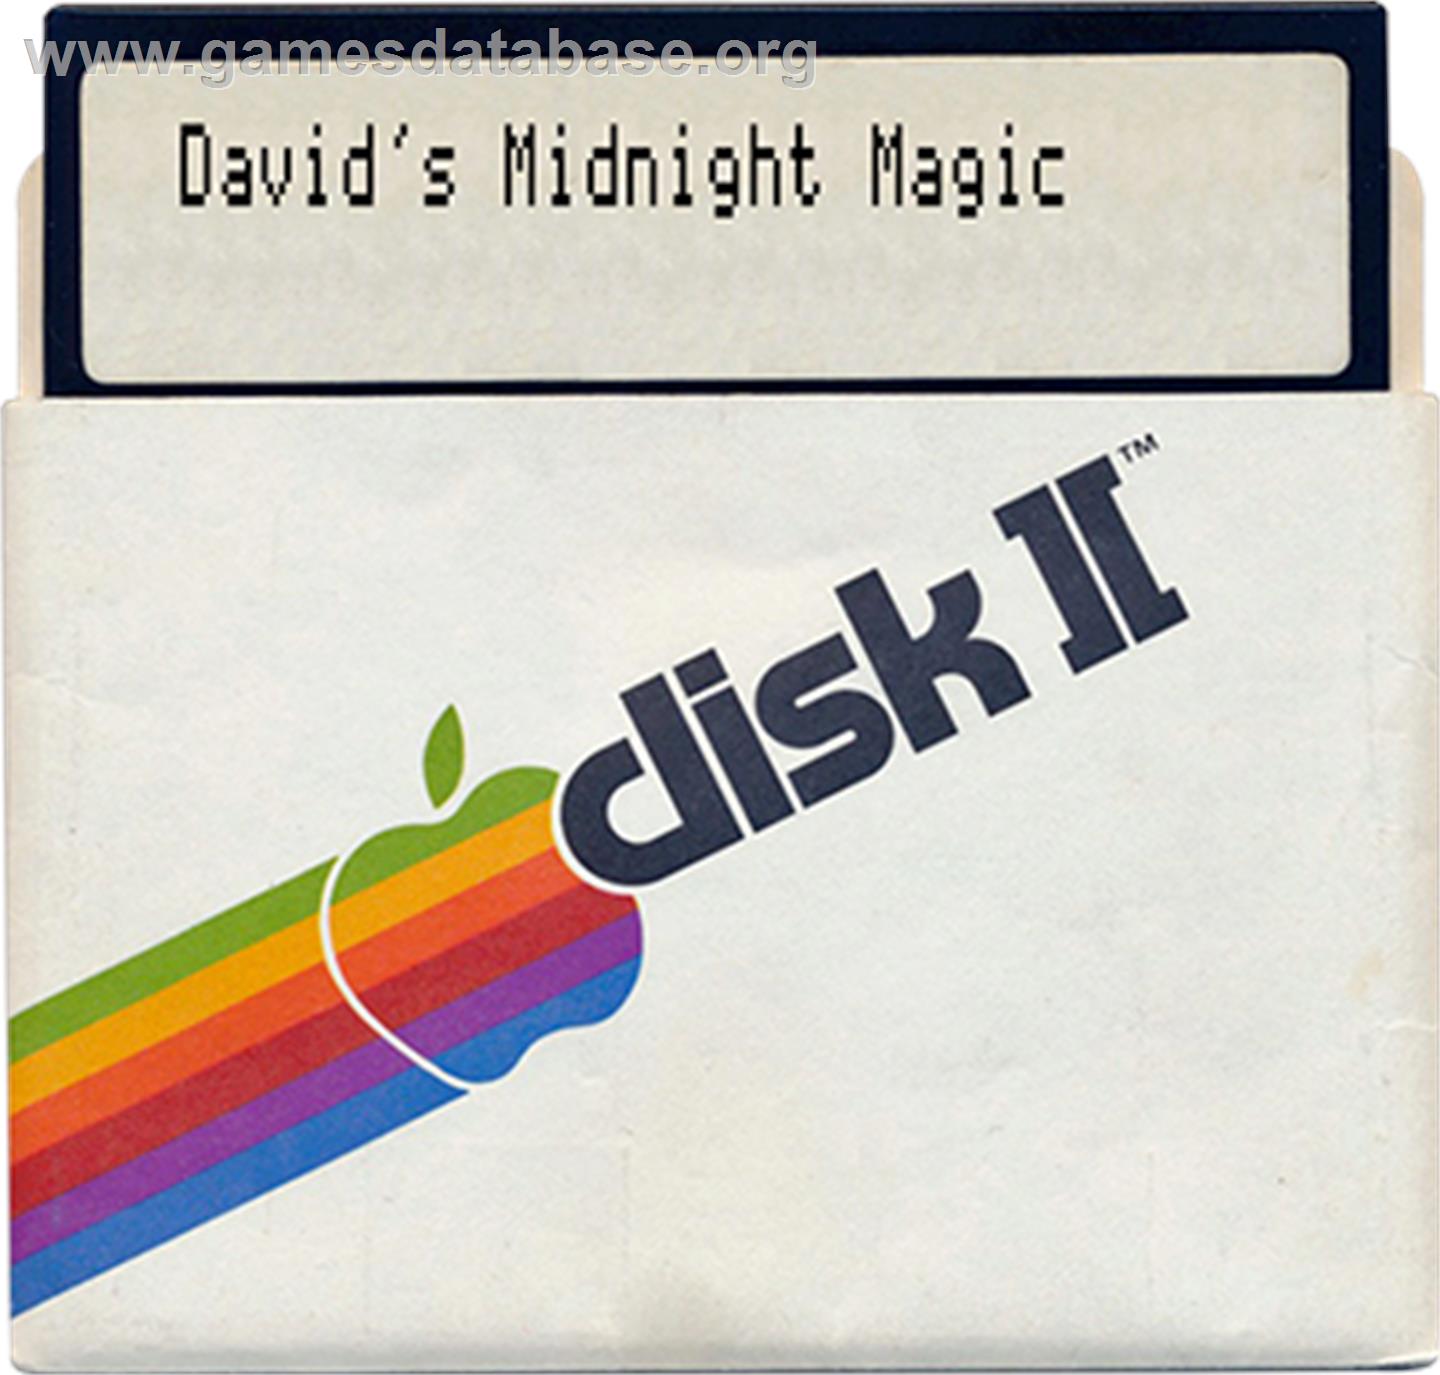 David's Midnight Magic - Apple II - Artwork - Disc